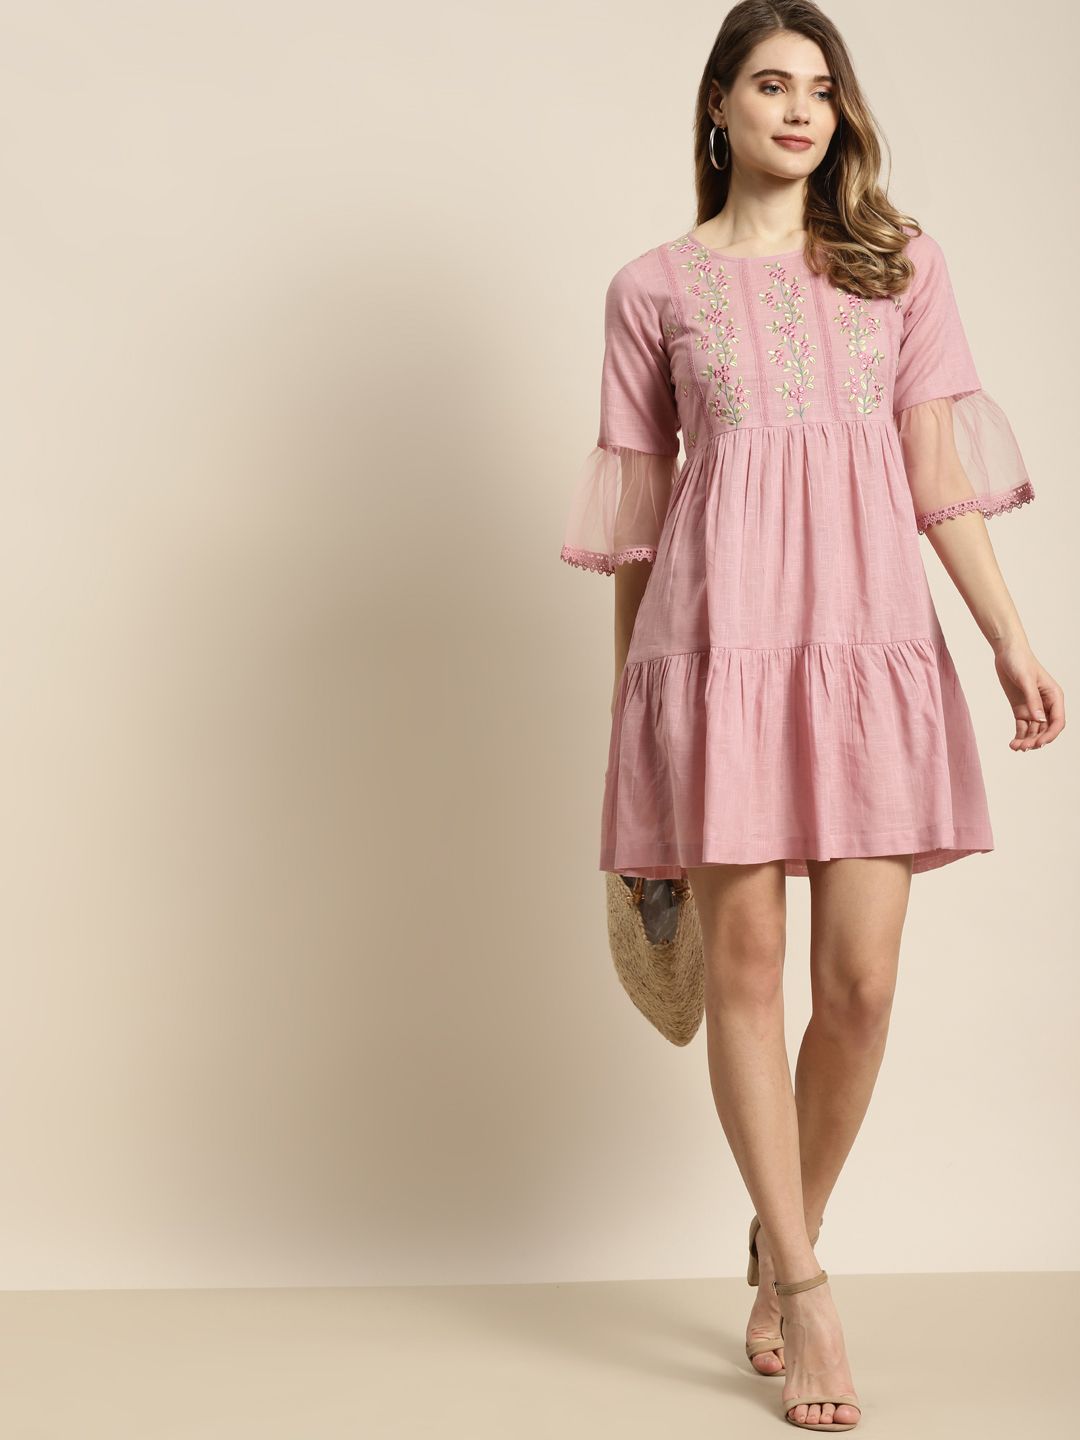 Juniper Blush Pink Yoke Design Floral Embroidered Bell Sleeves Cotton Slub Mini Dress Price in India